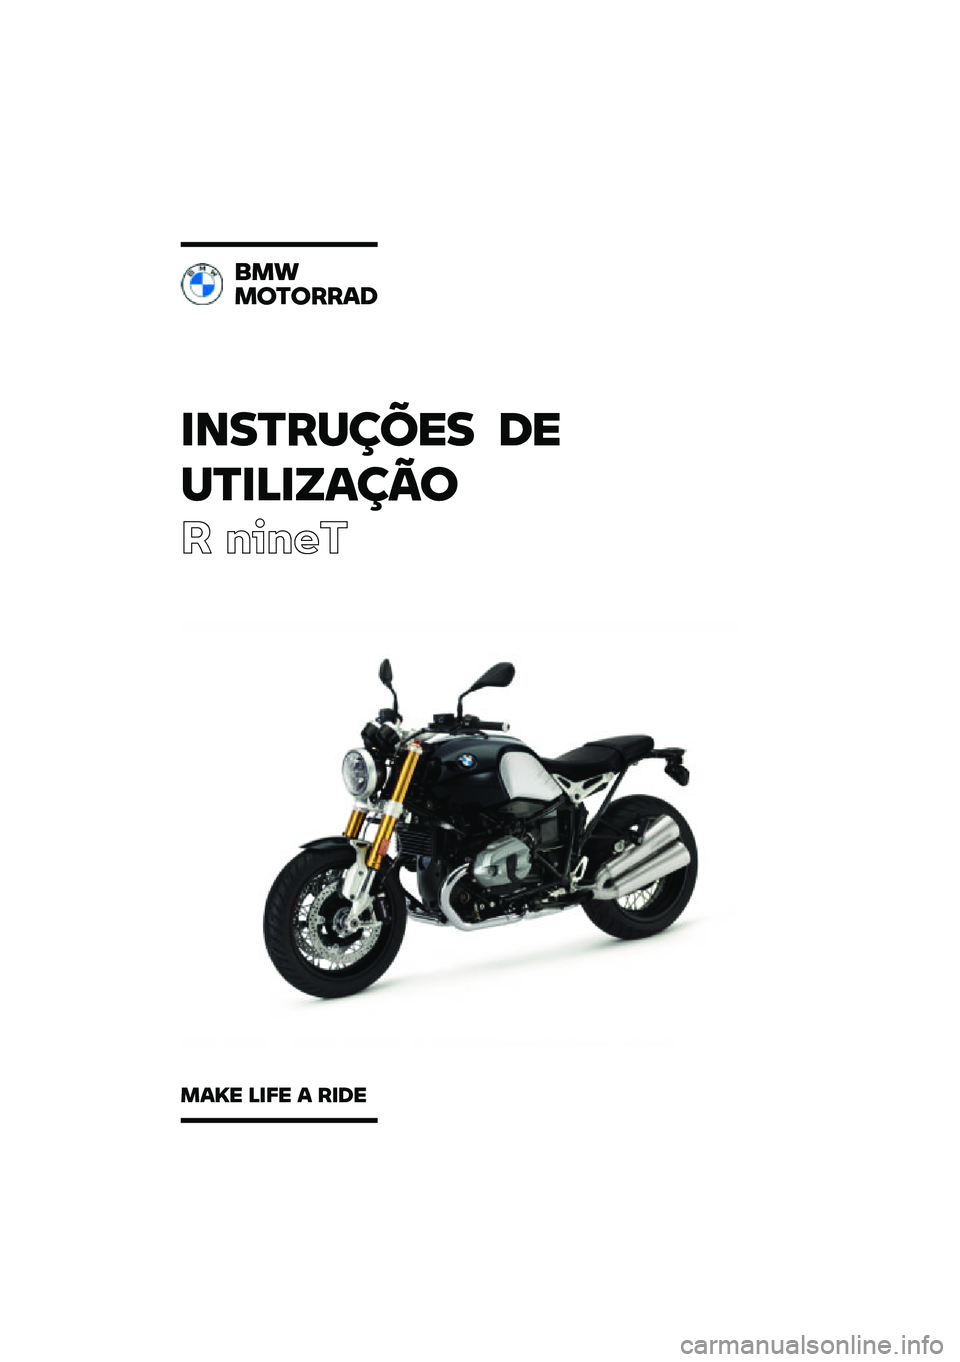 BMW MOTORRAD R NINE T 2021  Manual do condutor (in Portuguese) �������\b�	�\f� �
�\f
��������\b��

� �����
���
��
��
����
����\f ����\f � ���
�\f 